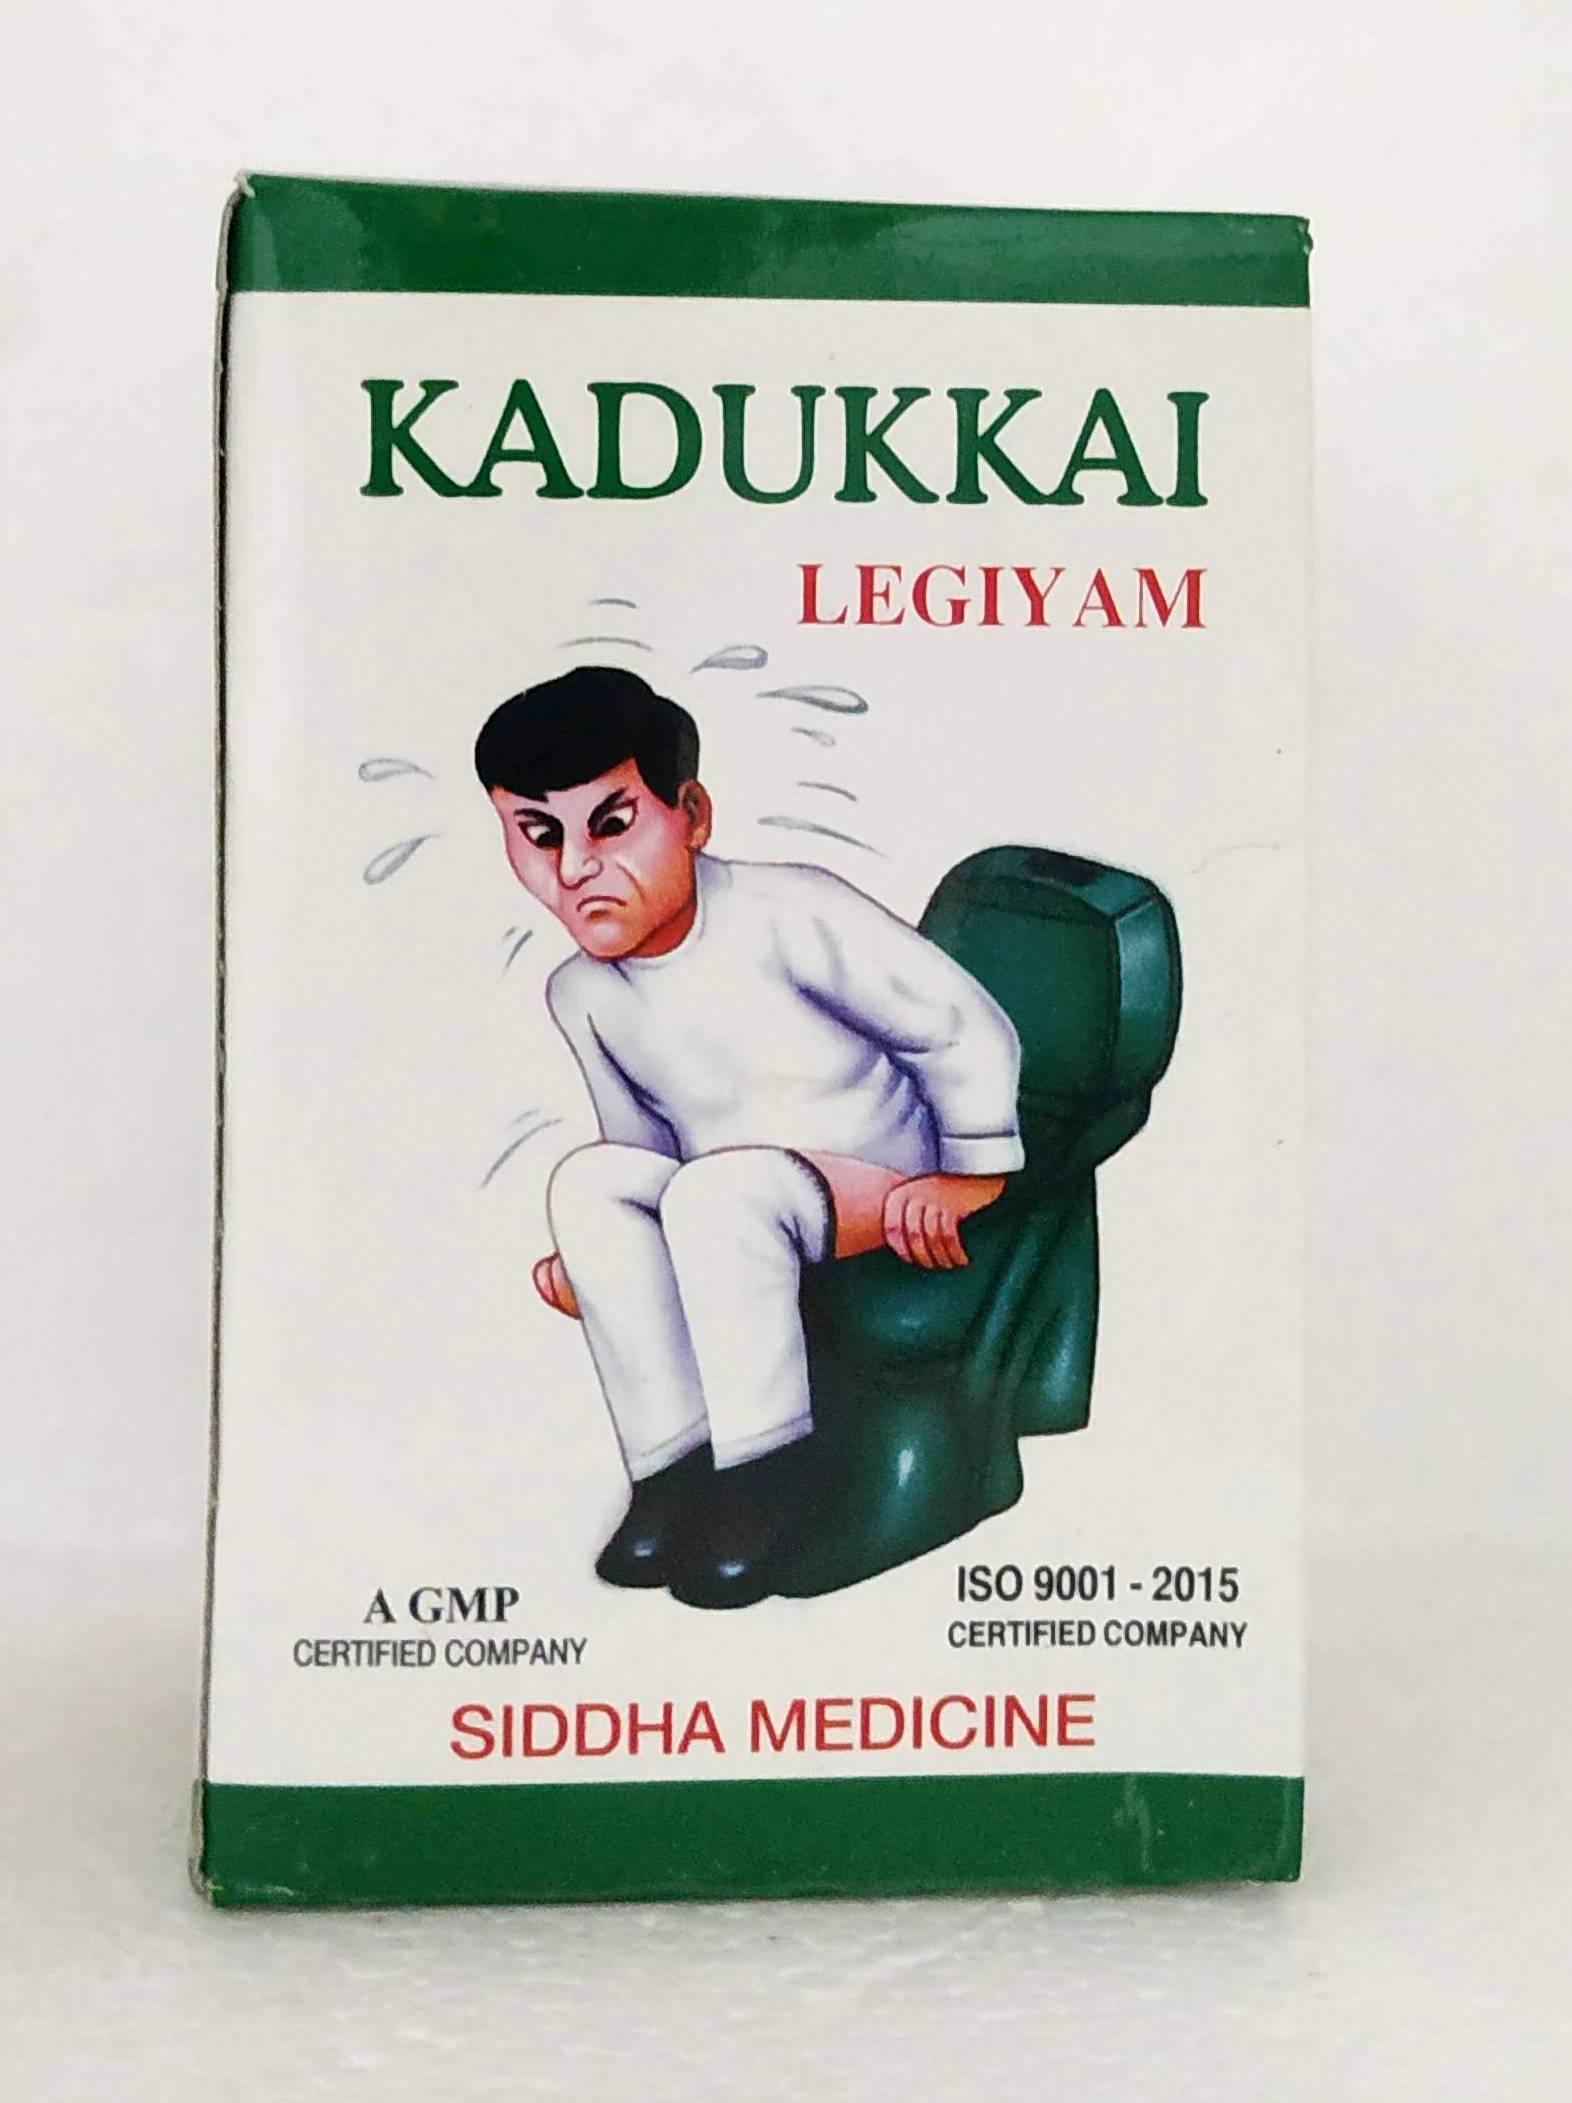 Shop Kadukkai legiyam 125gm at price 80.00 from Aravindh Online - Ayush Care